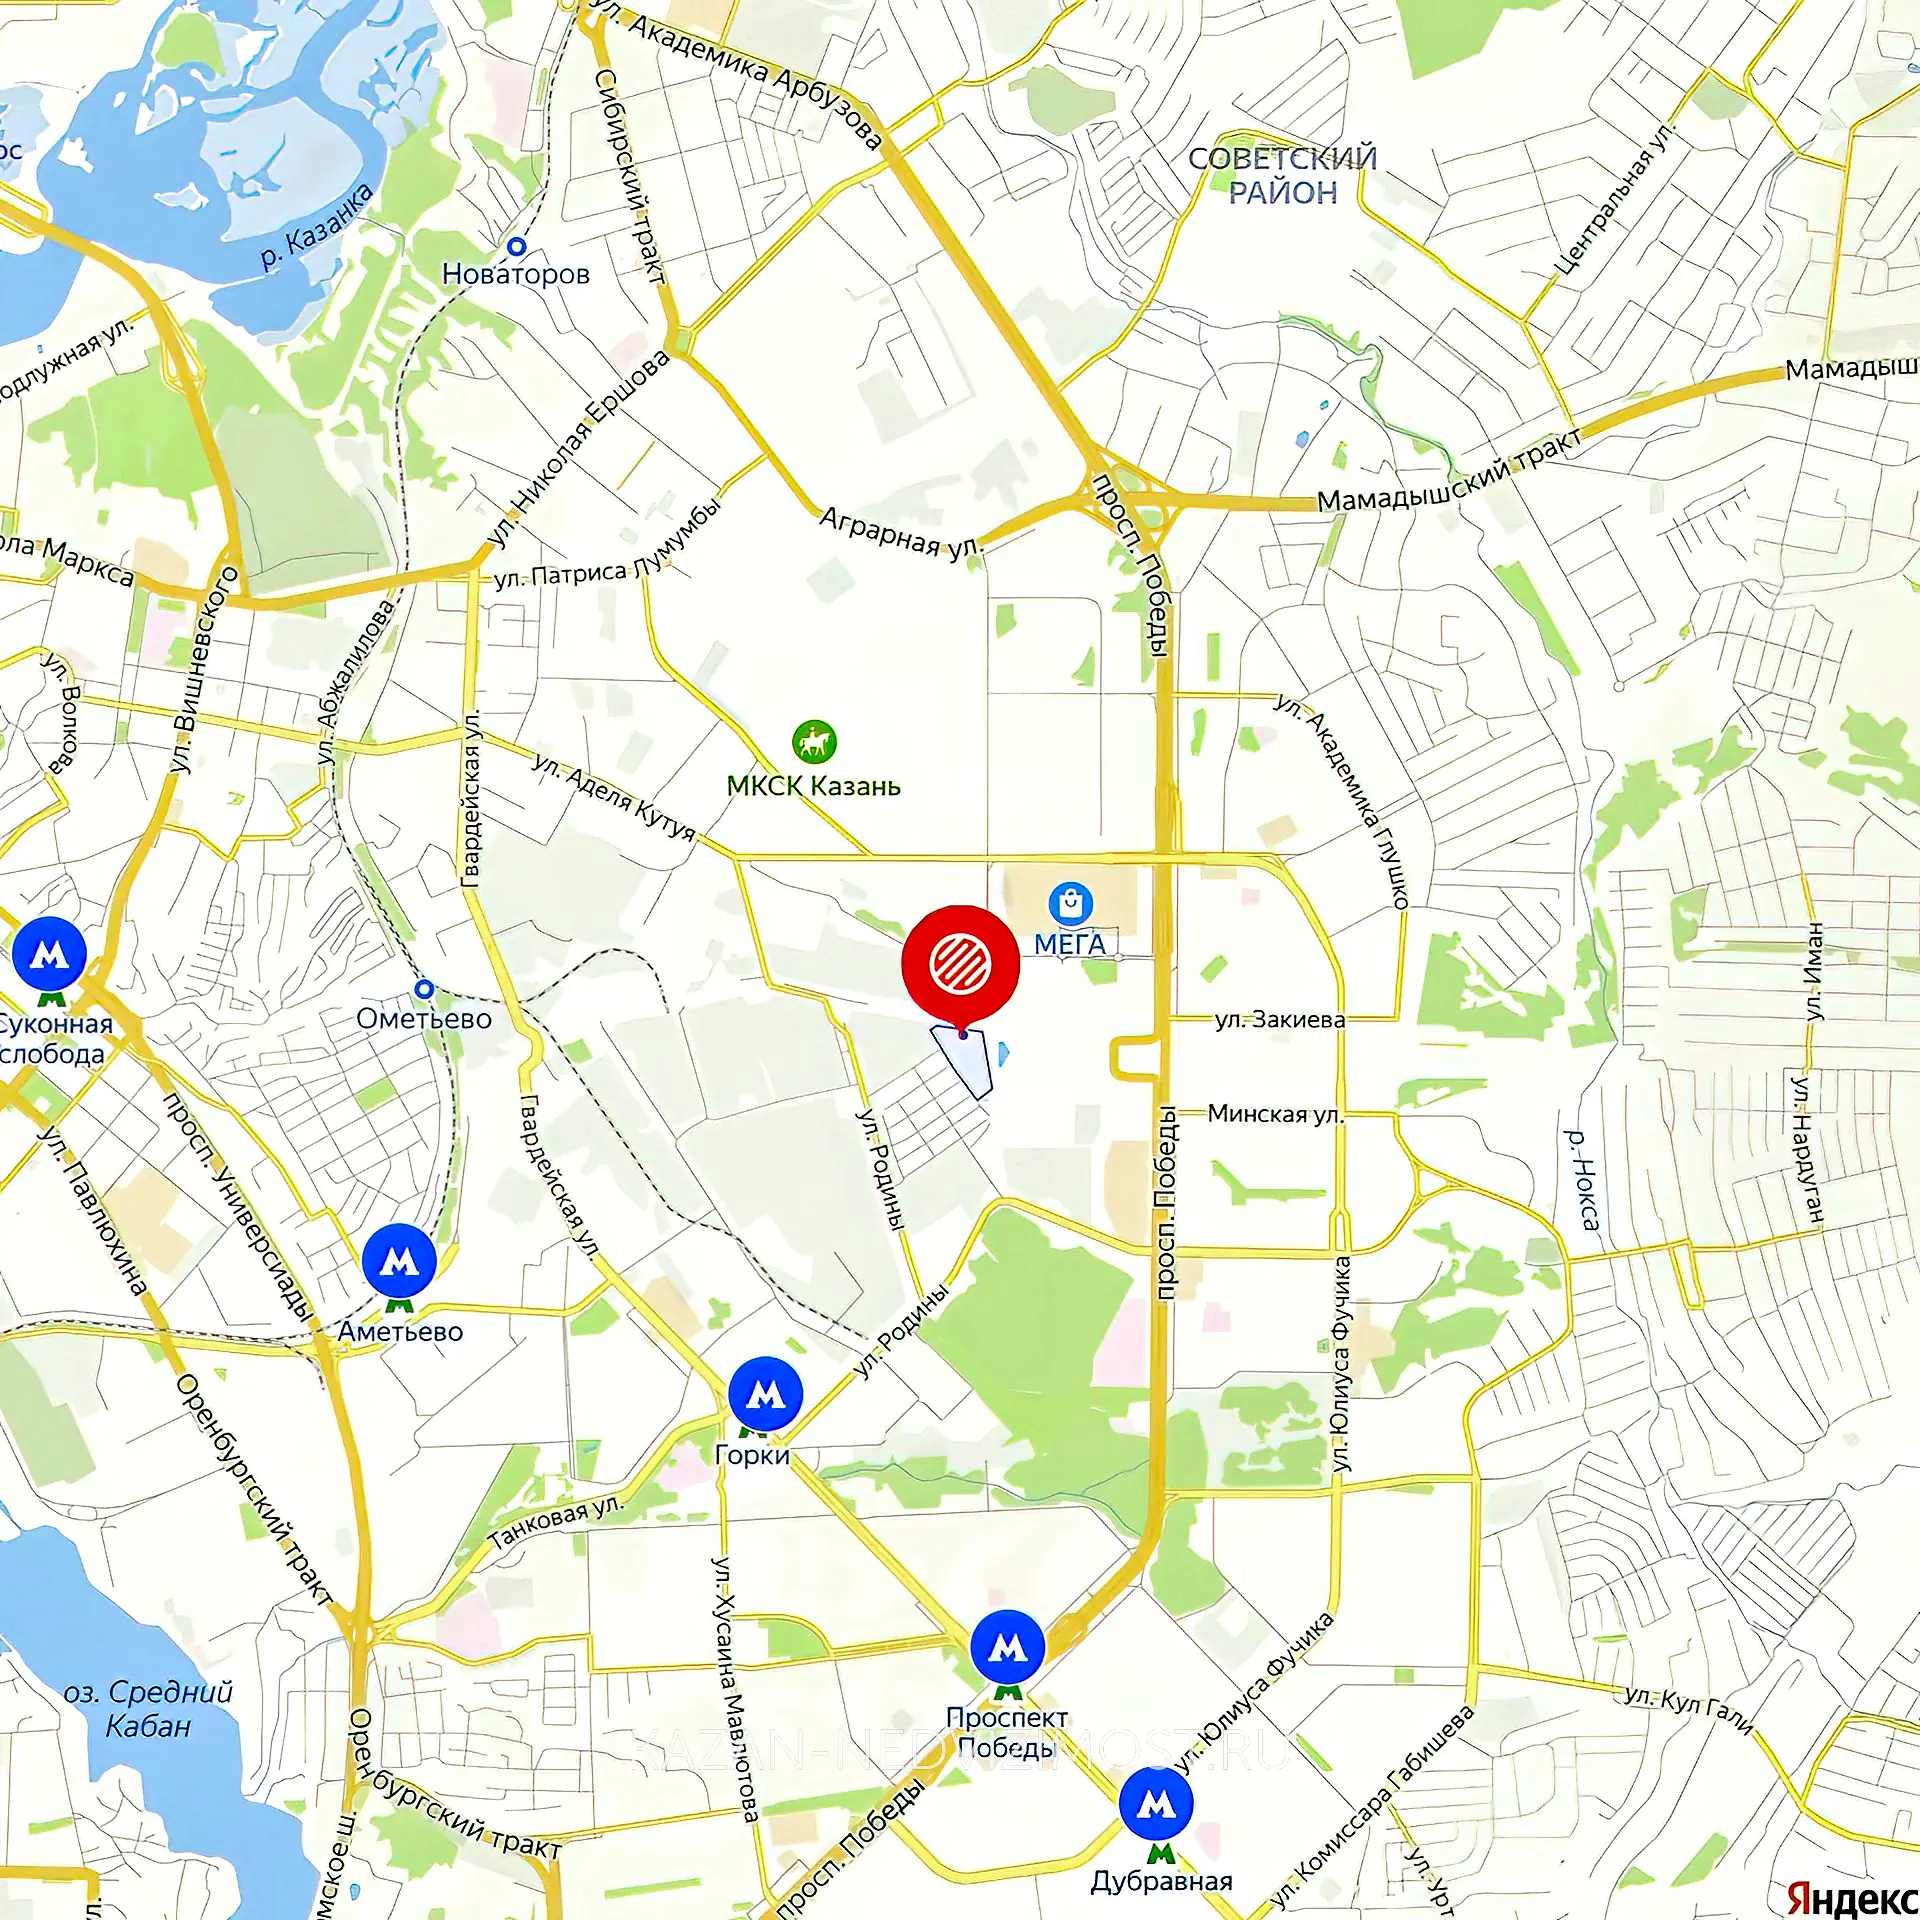 Расположение и маршрут на карте от ЖК Яратам до центра города